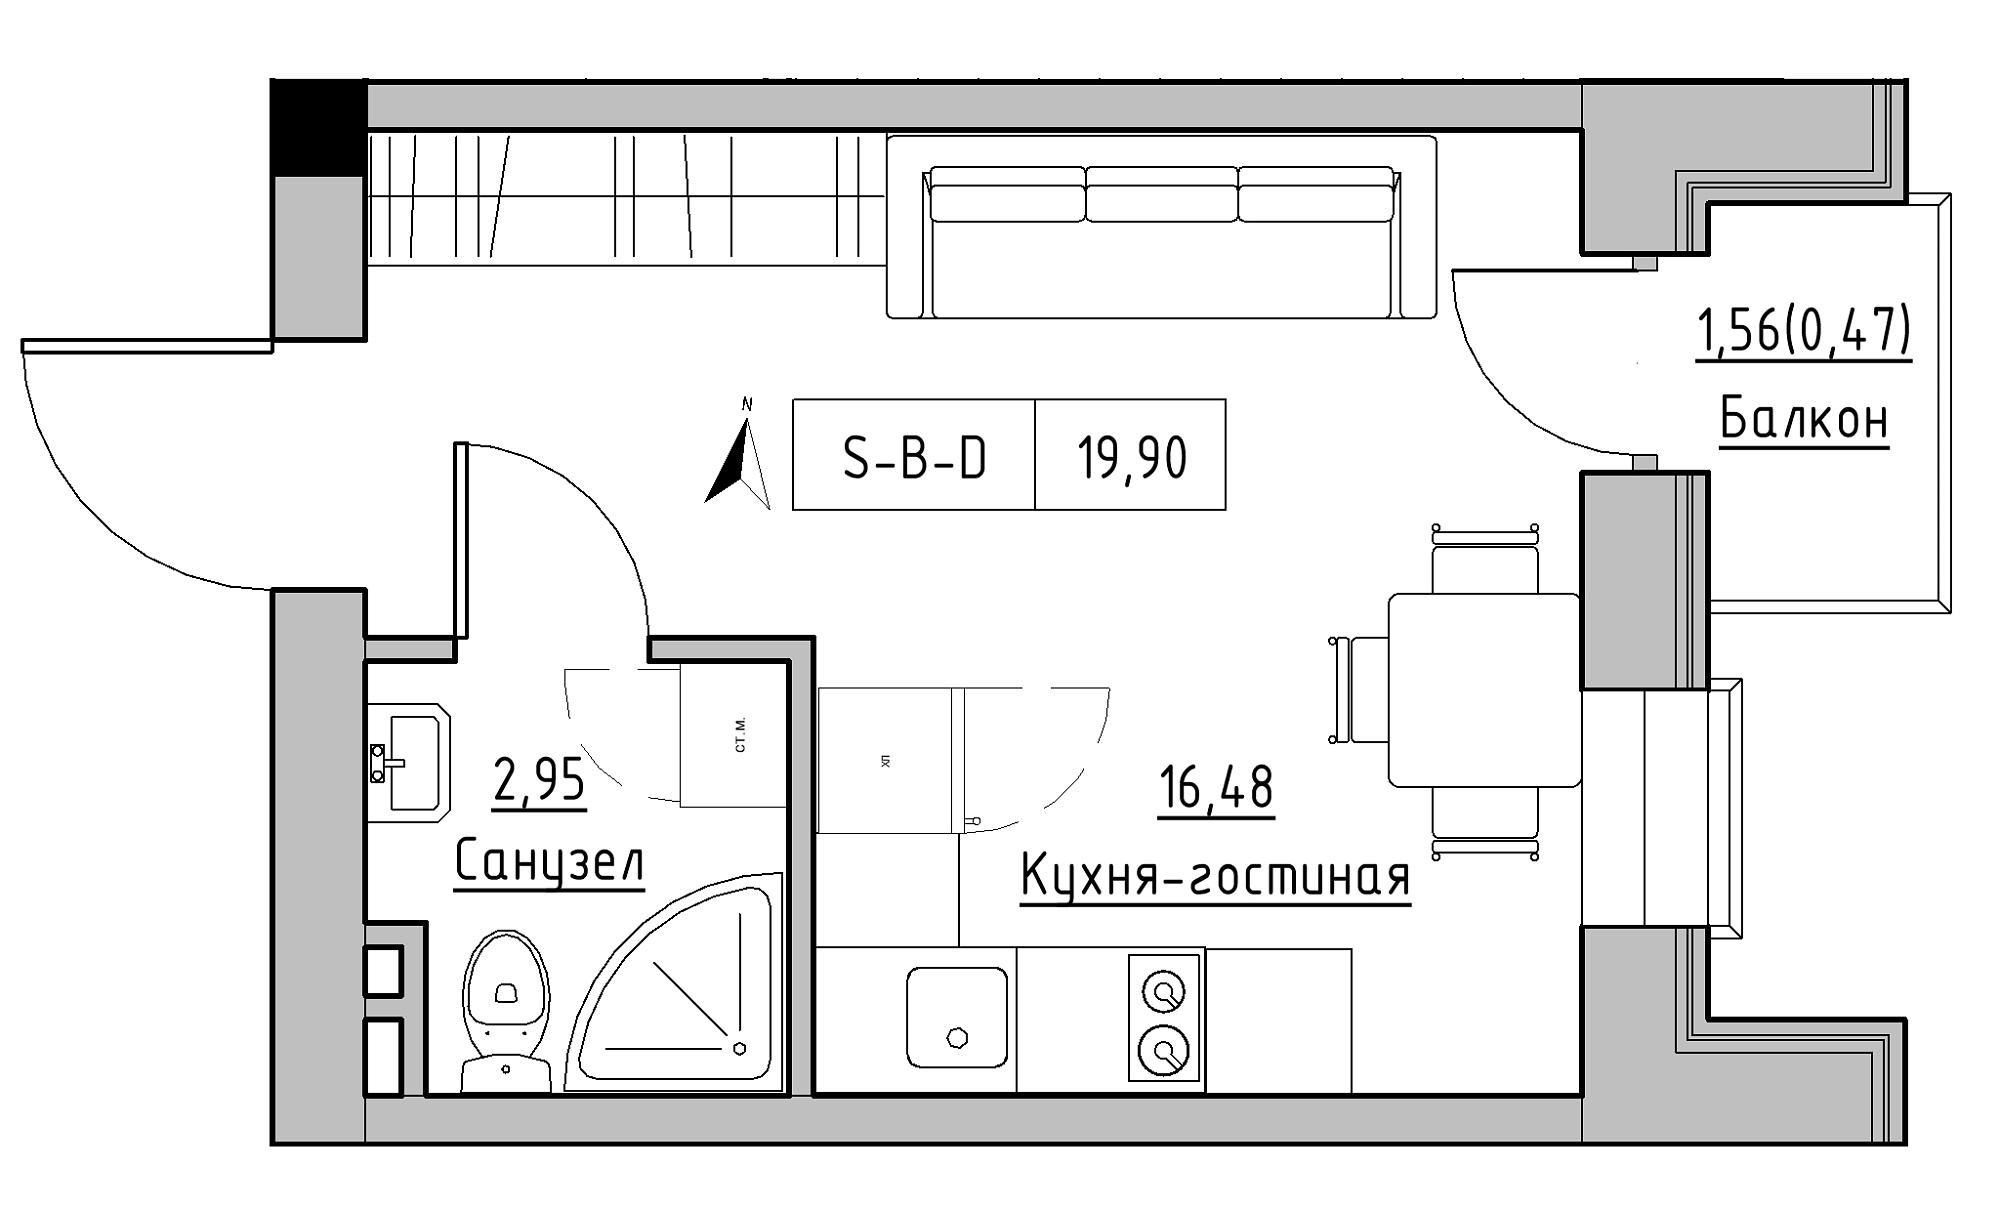 Planning Smart flats area 19.9m2, KS-023-04/0006.